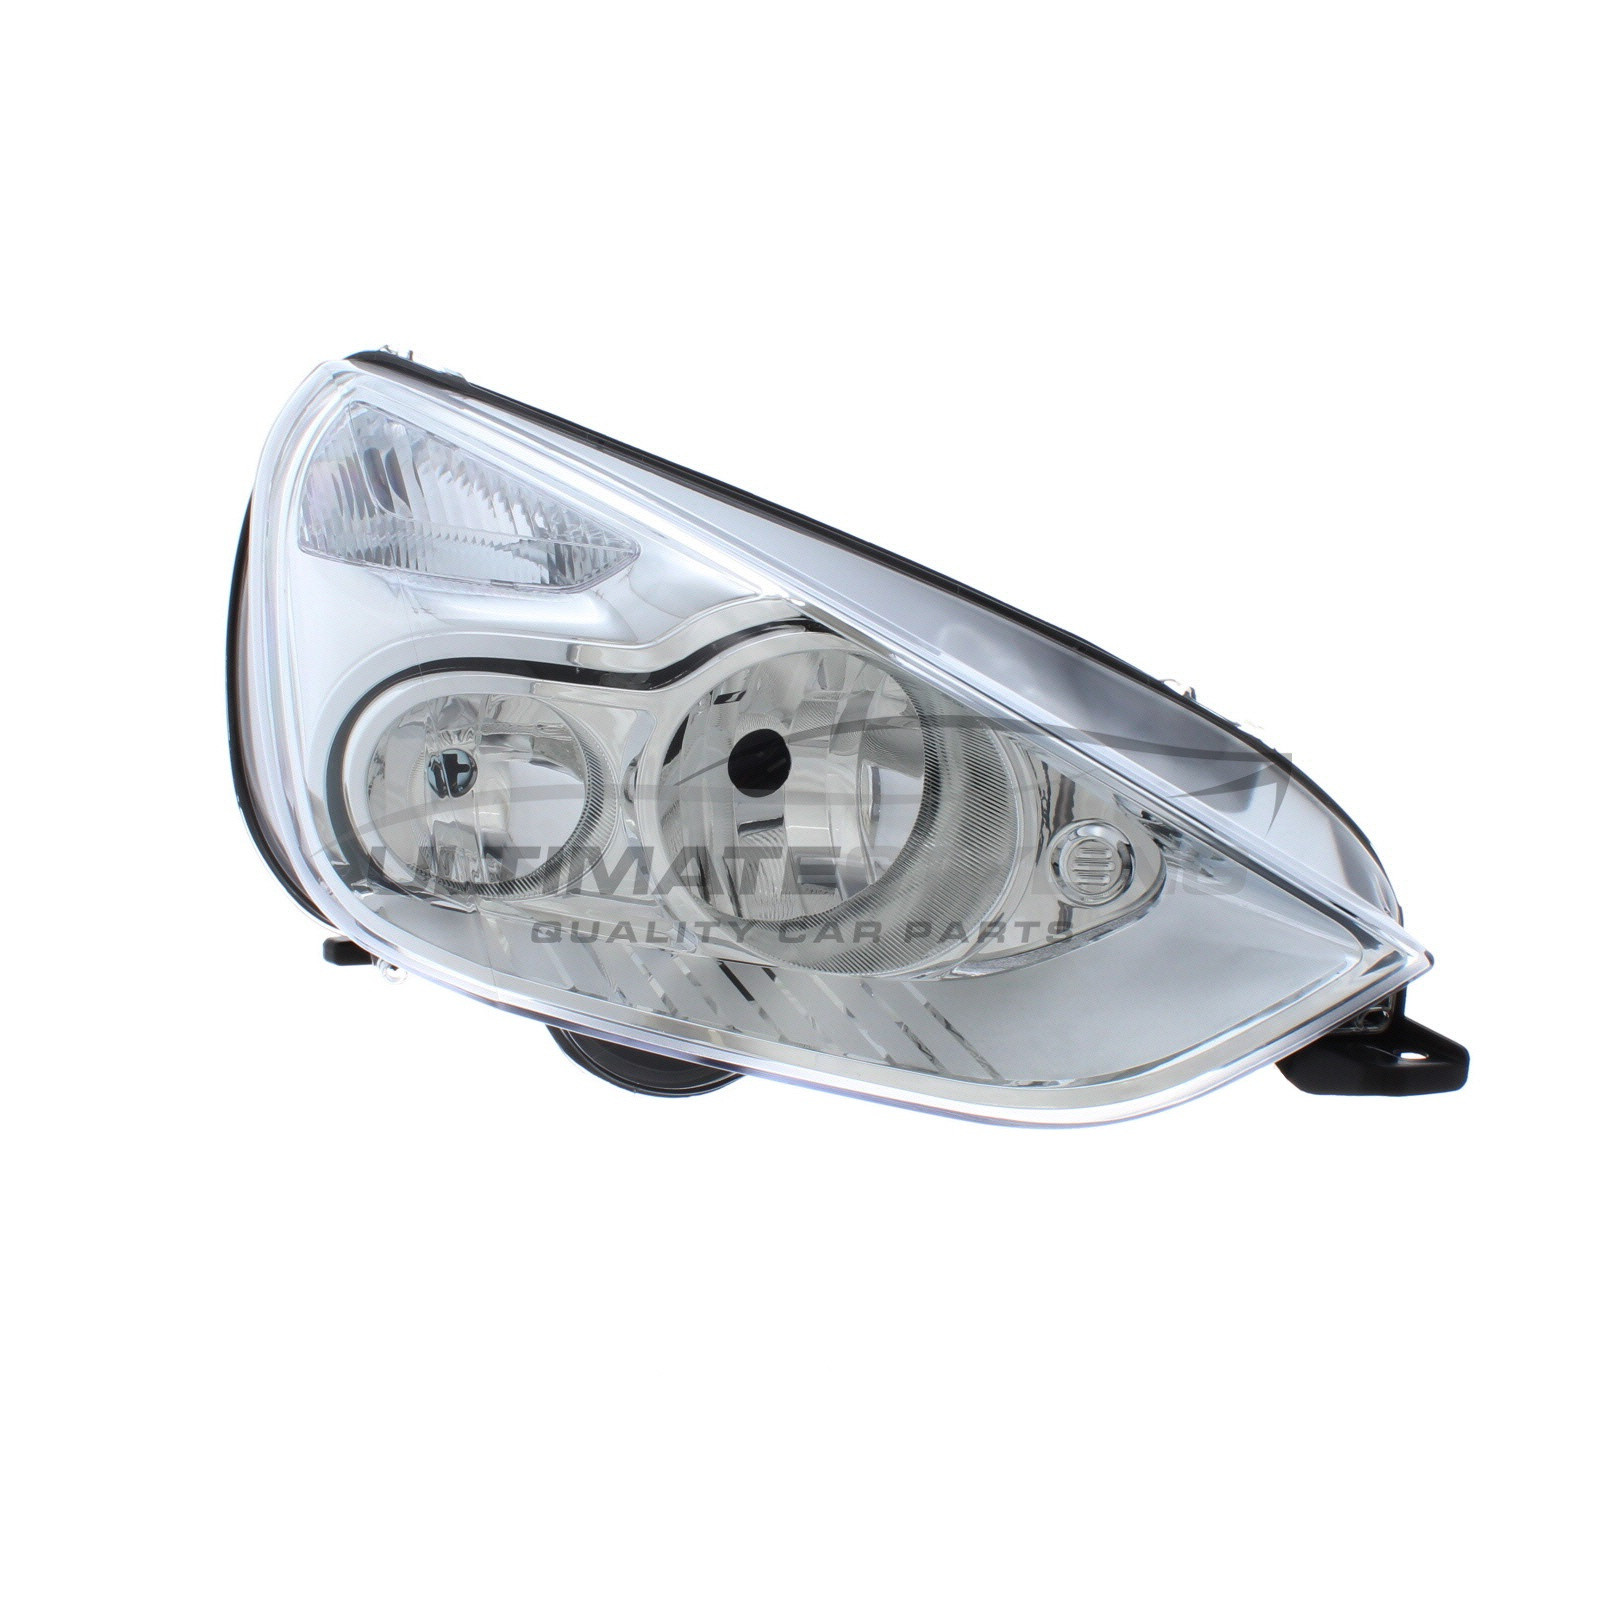 Headlight / Headlamp for Ford Galaxy